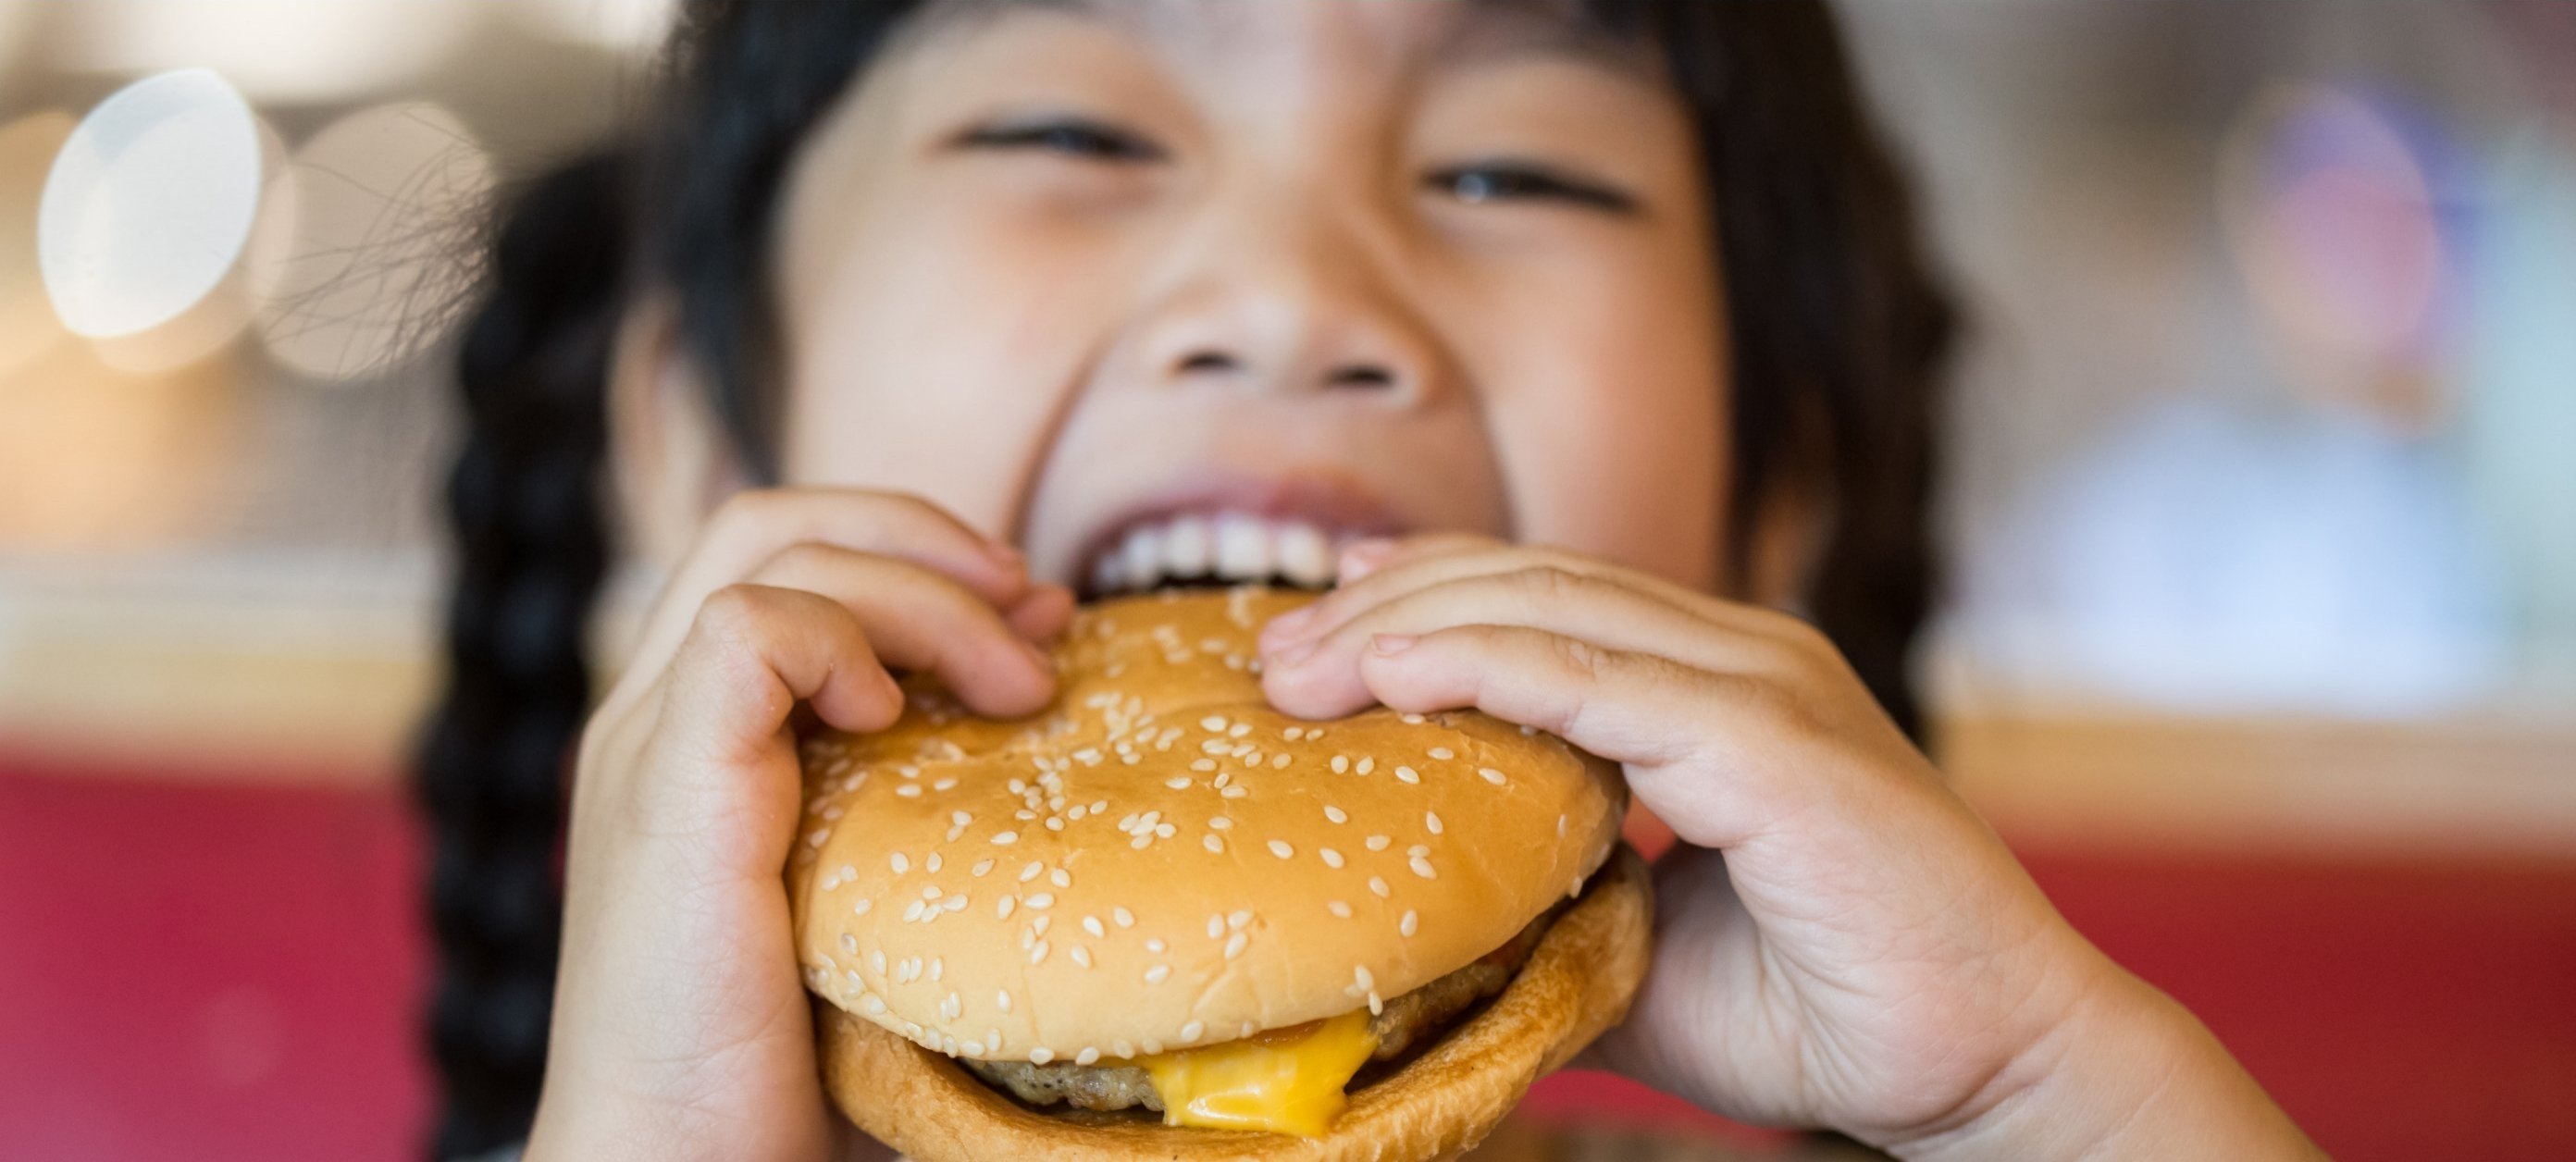 Girl eating cheeseburger